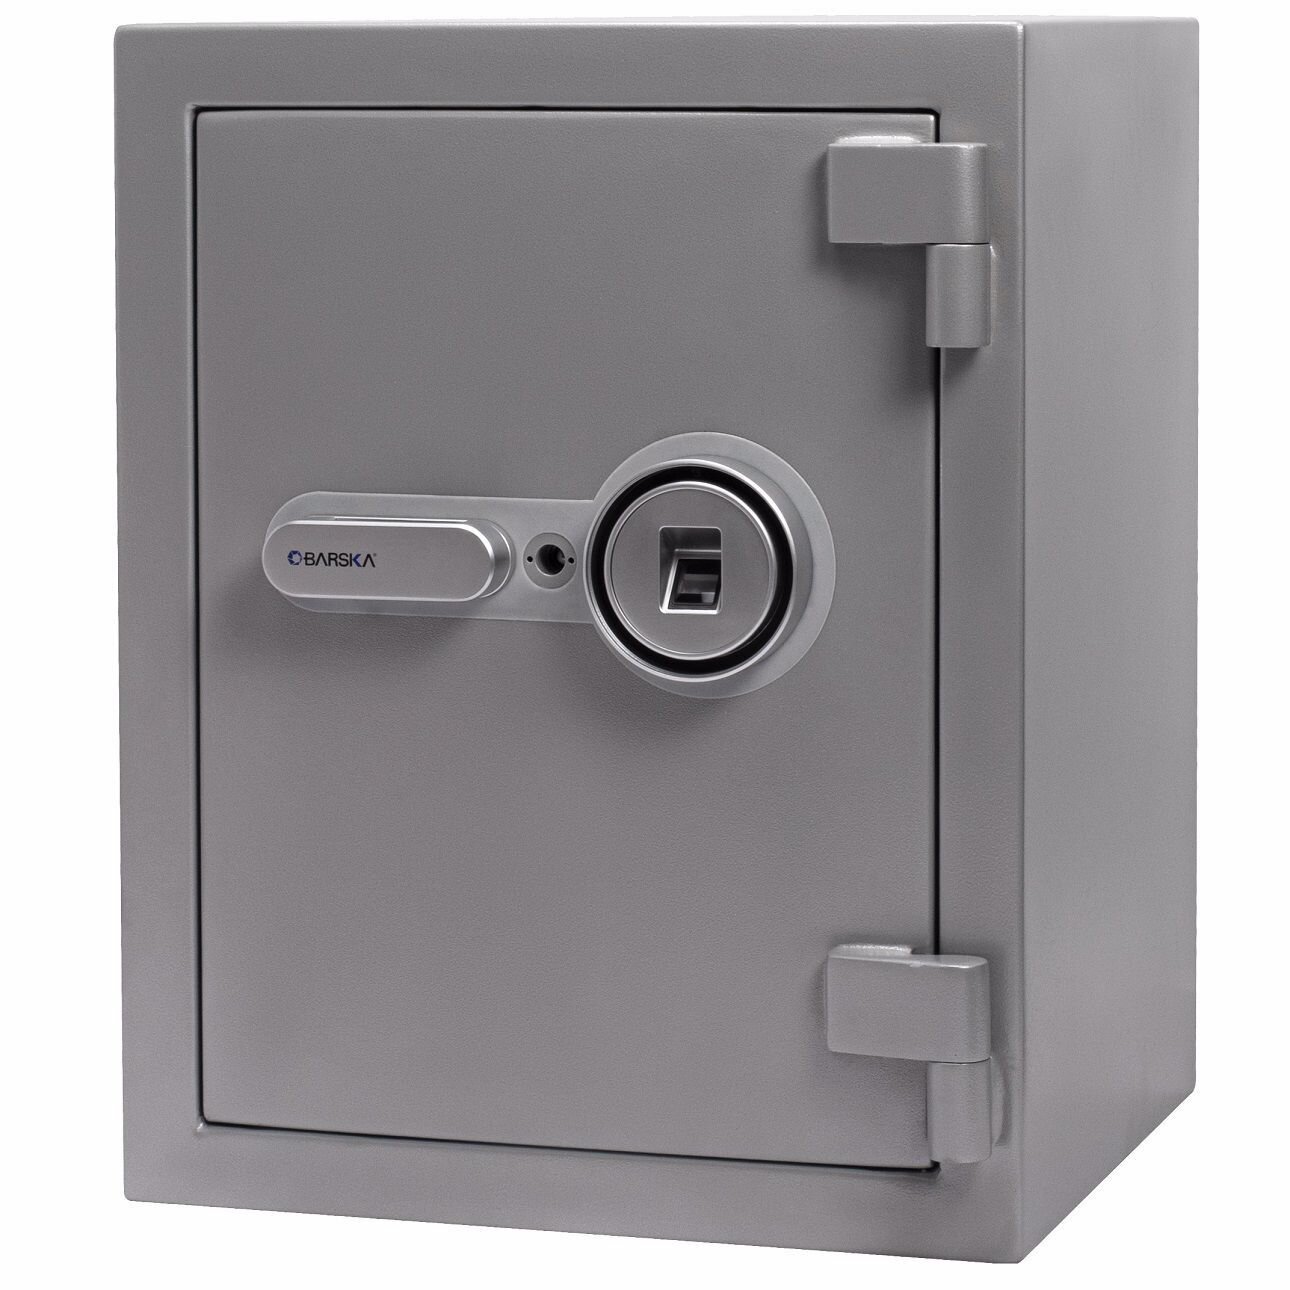 BOFON Security Box, Fingerprint Password Safe Box with Key,Built